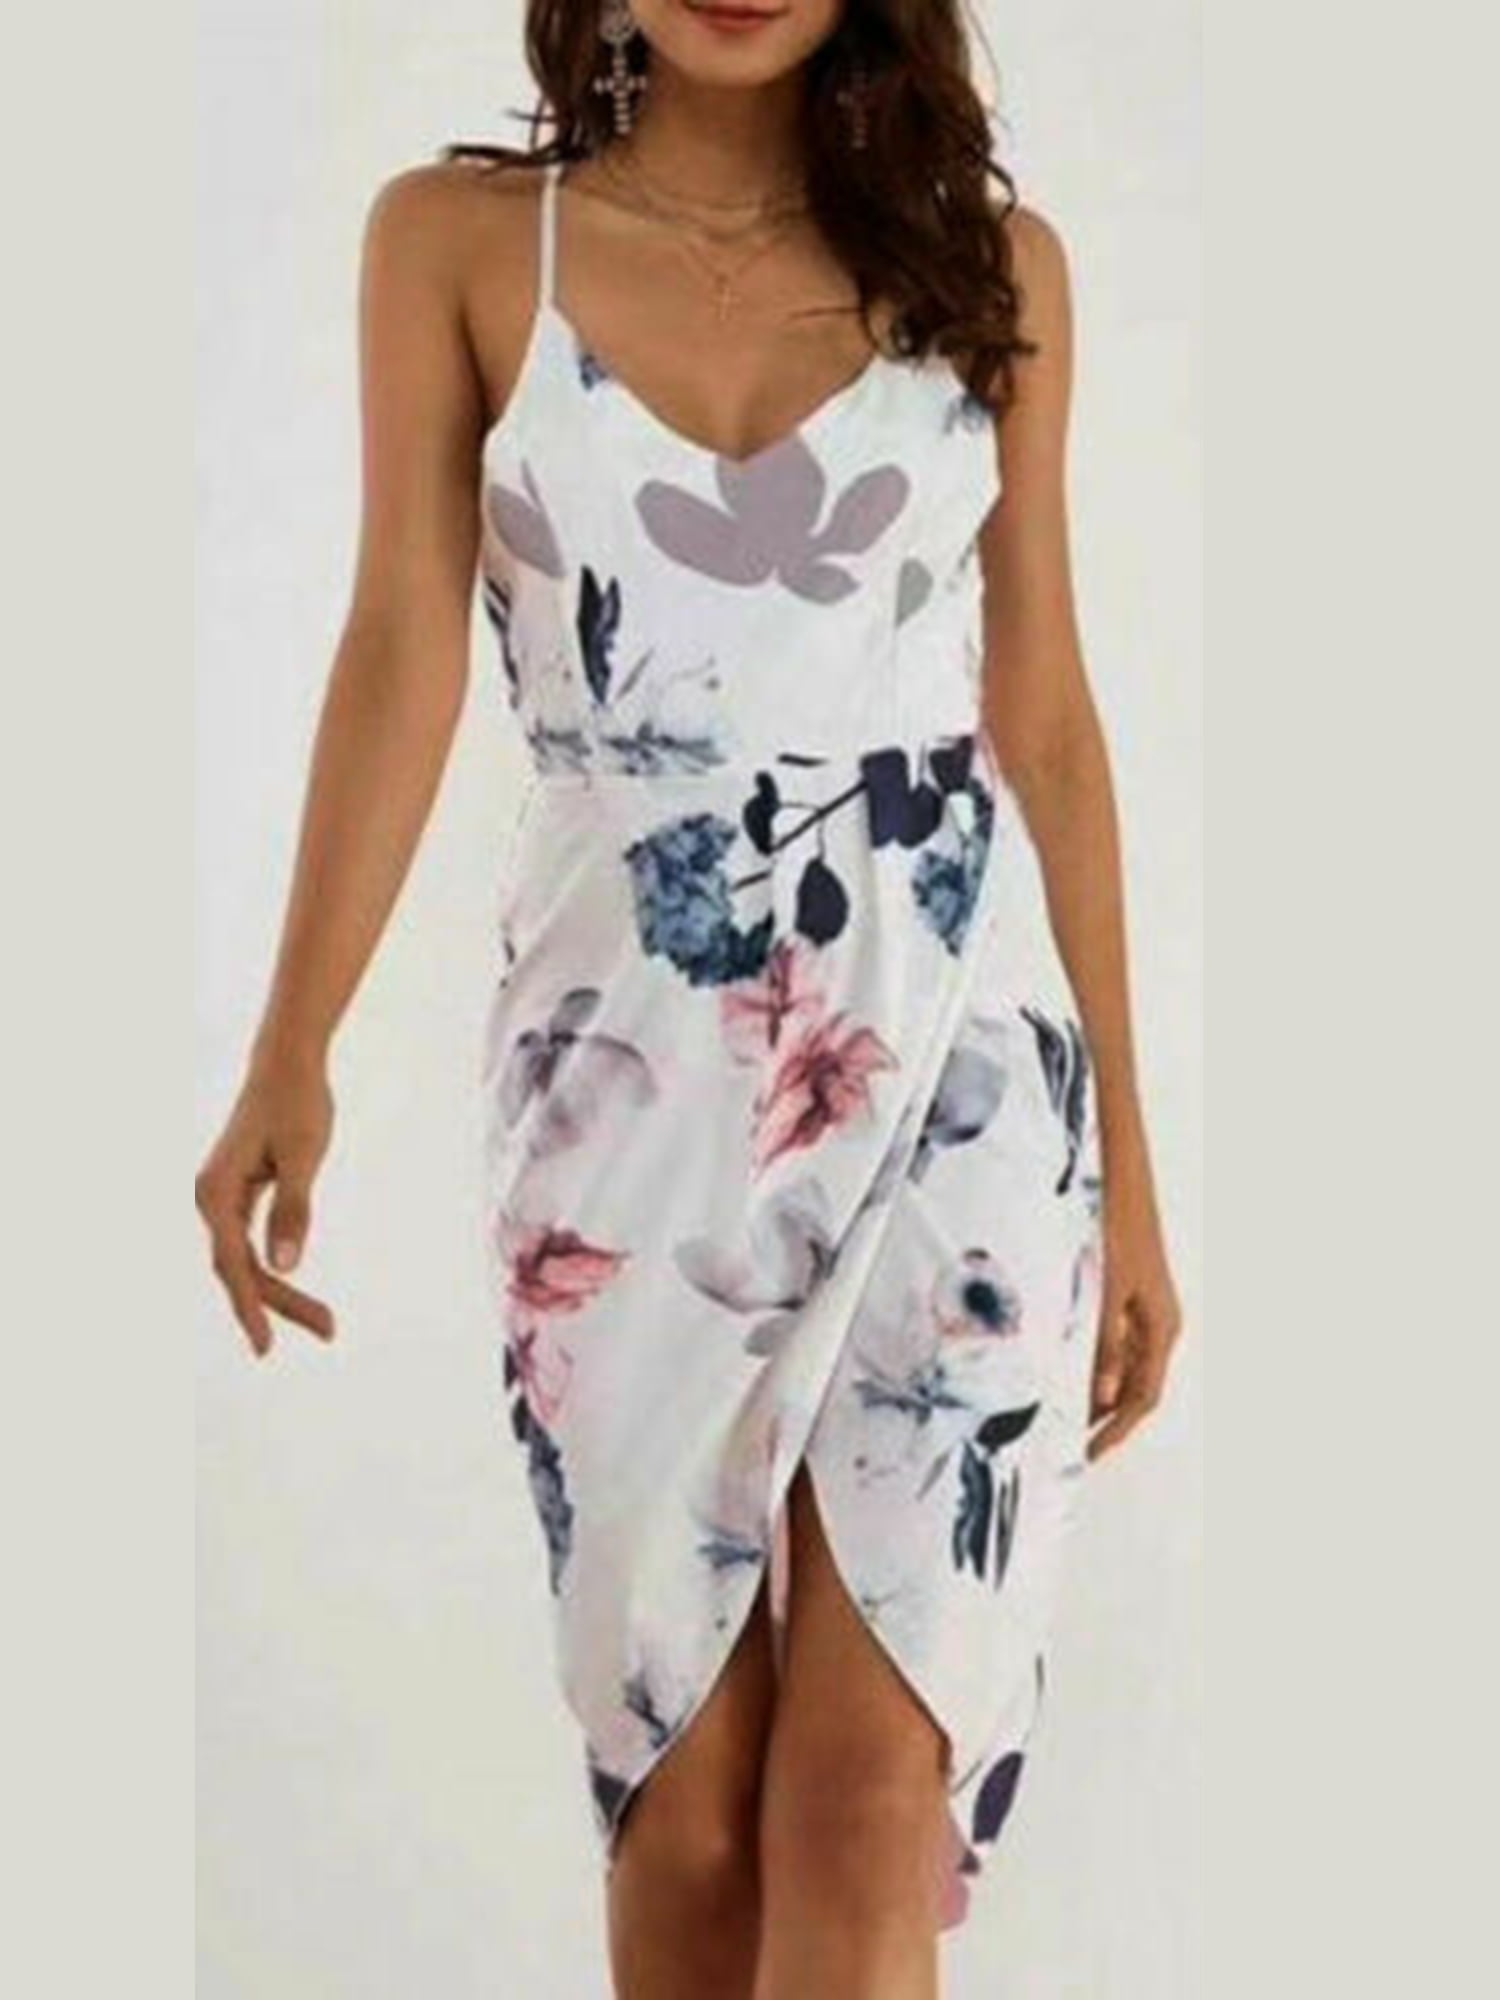 KYLEON Mini Dress for Women Sleeveless O Neck Musical Note Printed Summer Casual Cute Beach Swing Tank Dress Sundress 